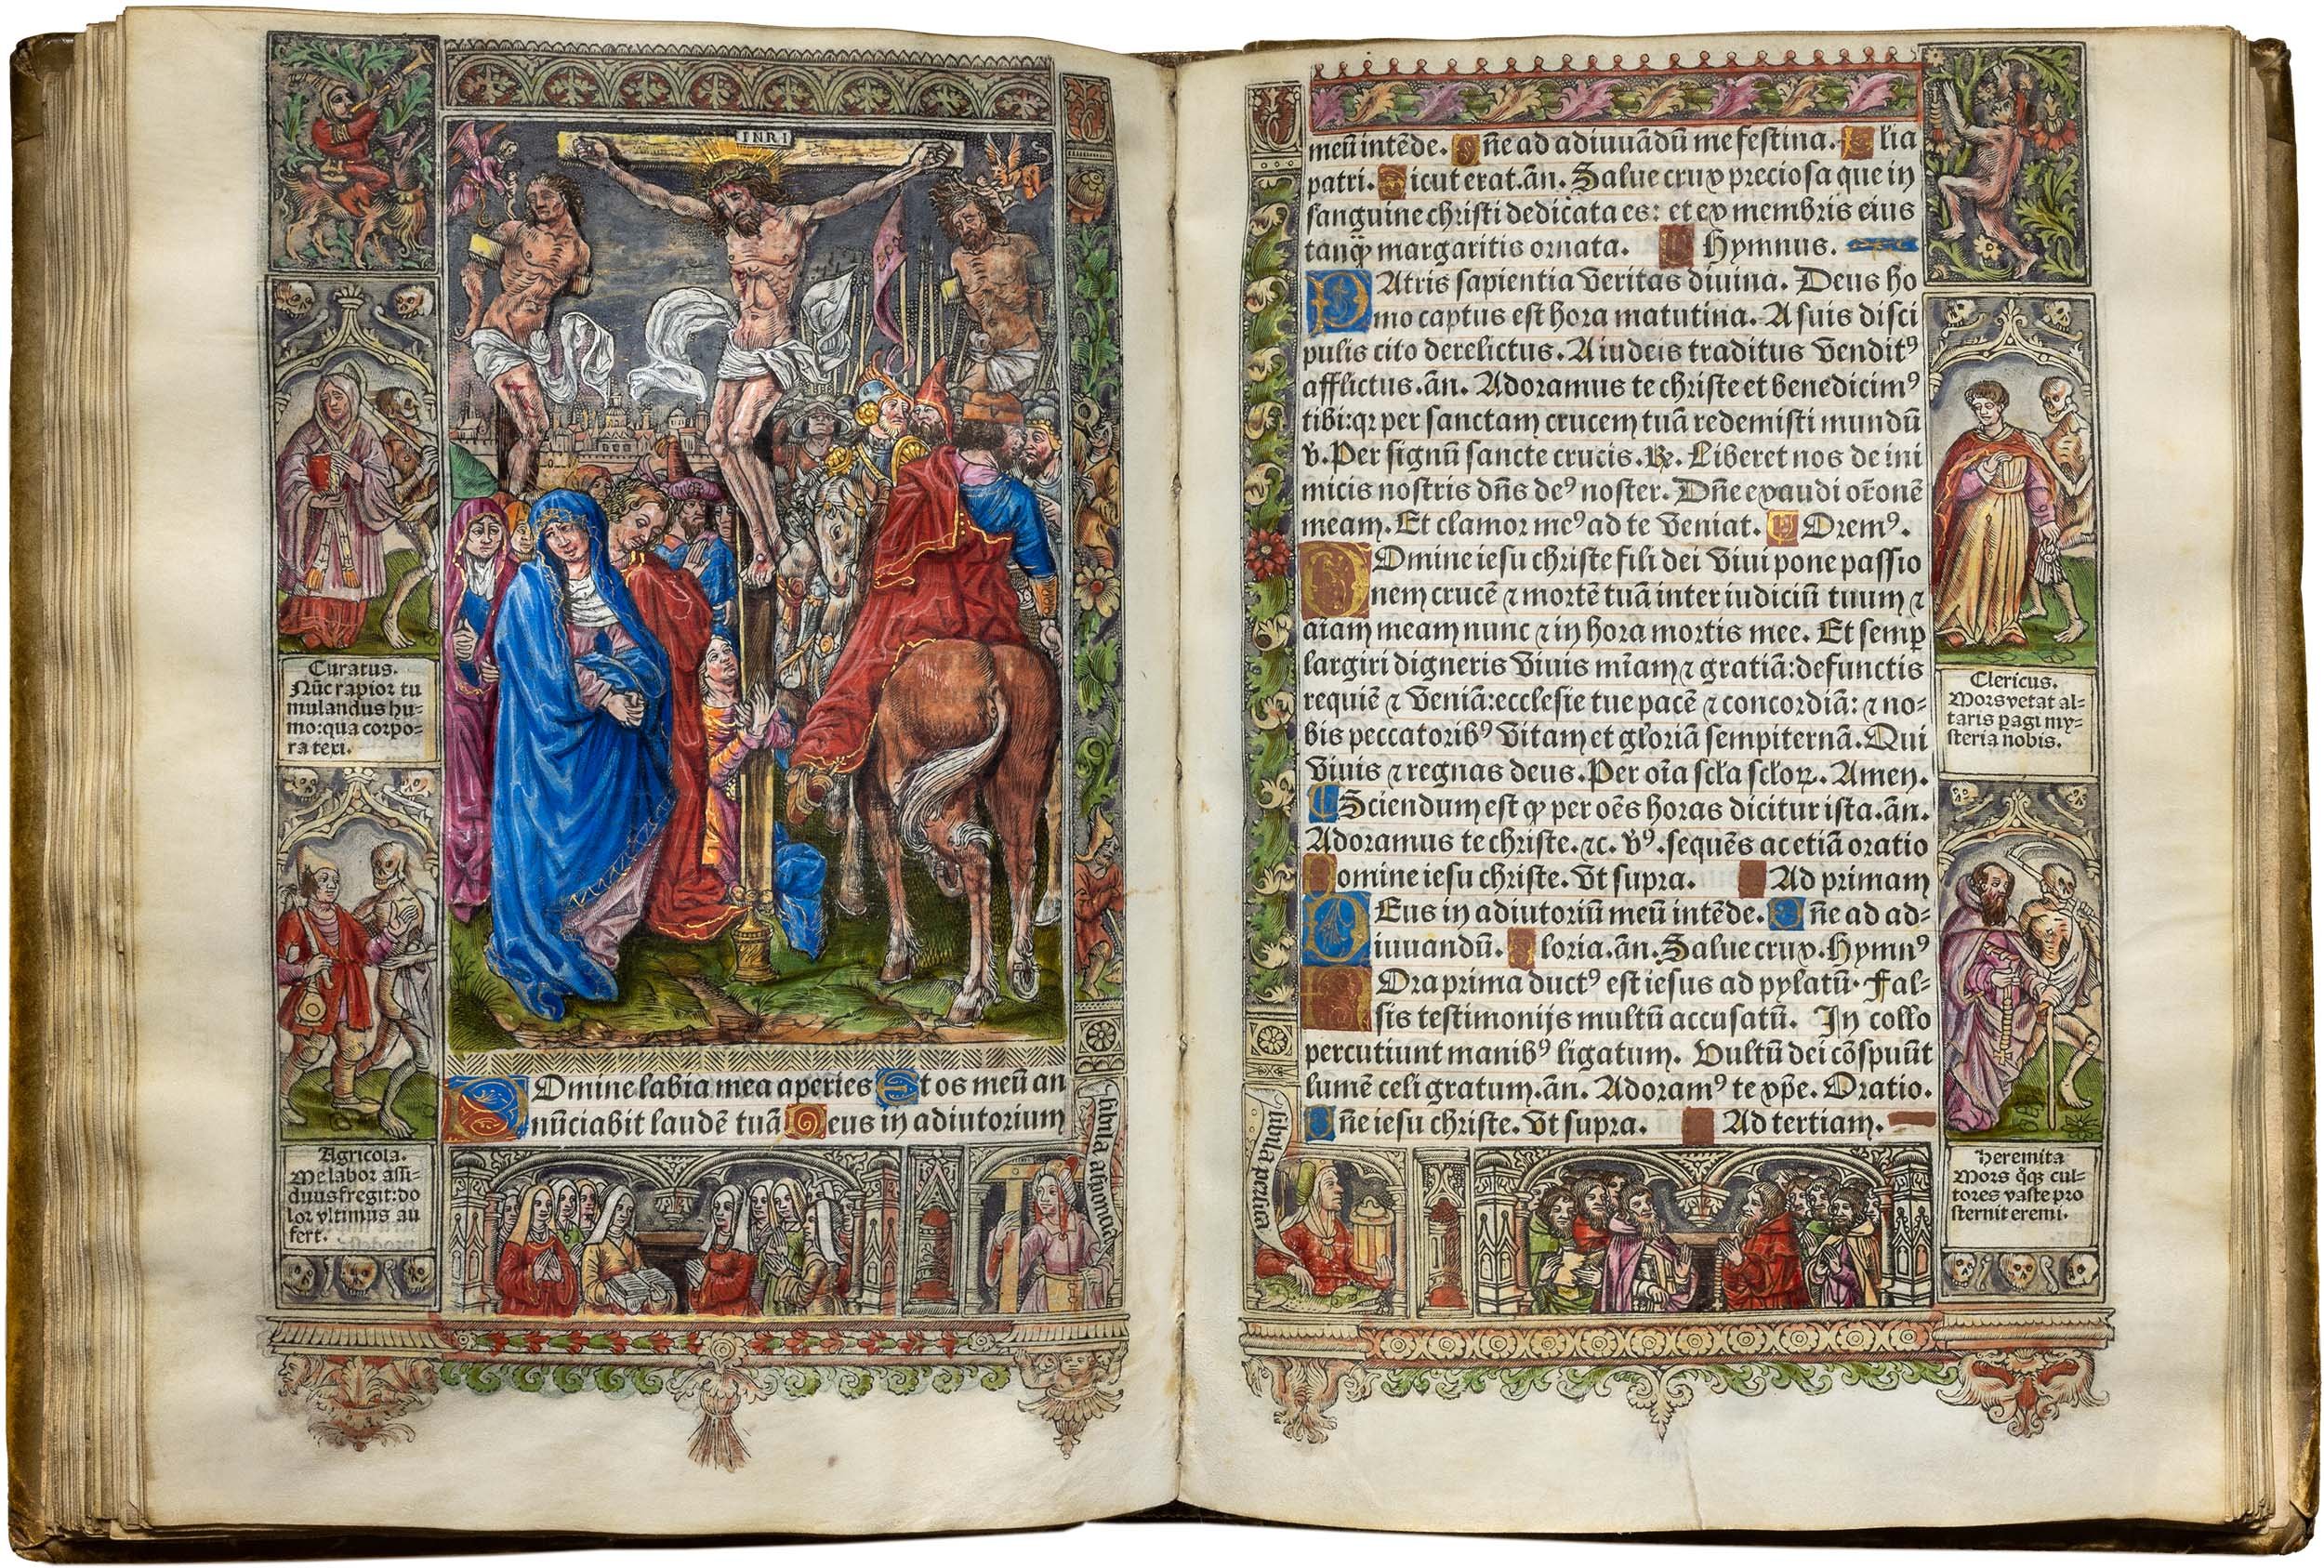 Horae-bmv-31-march-1511-kerver-printed-book-of-hours-illuminated-copy-vellum-66.jpg